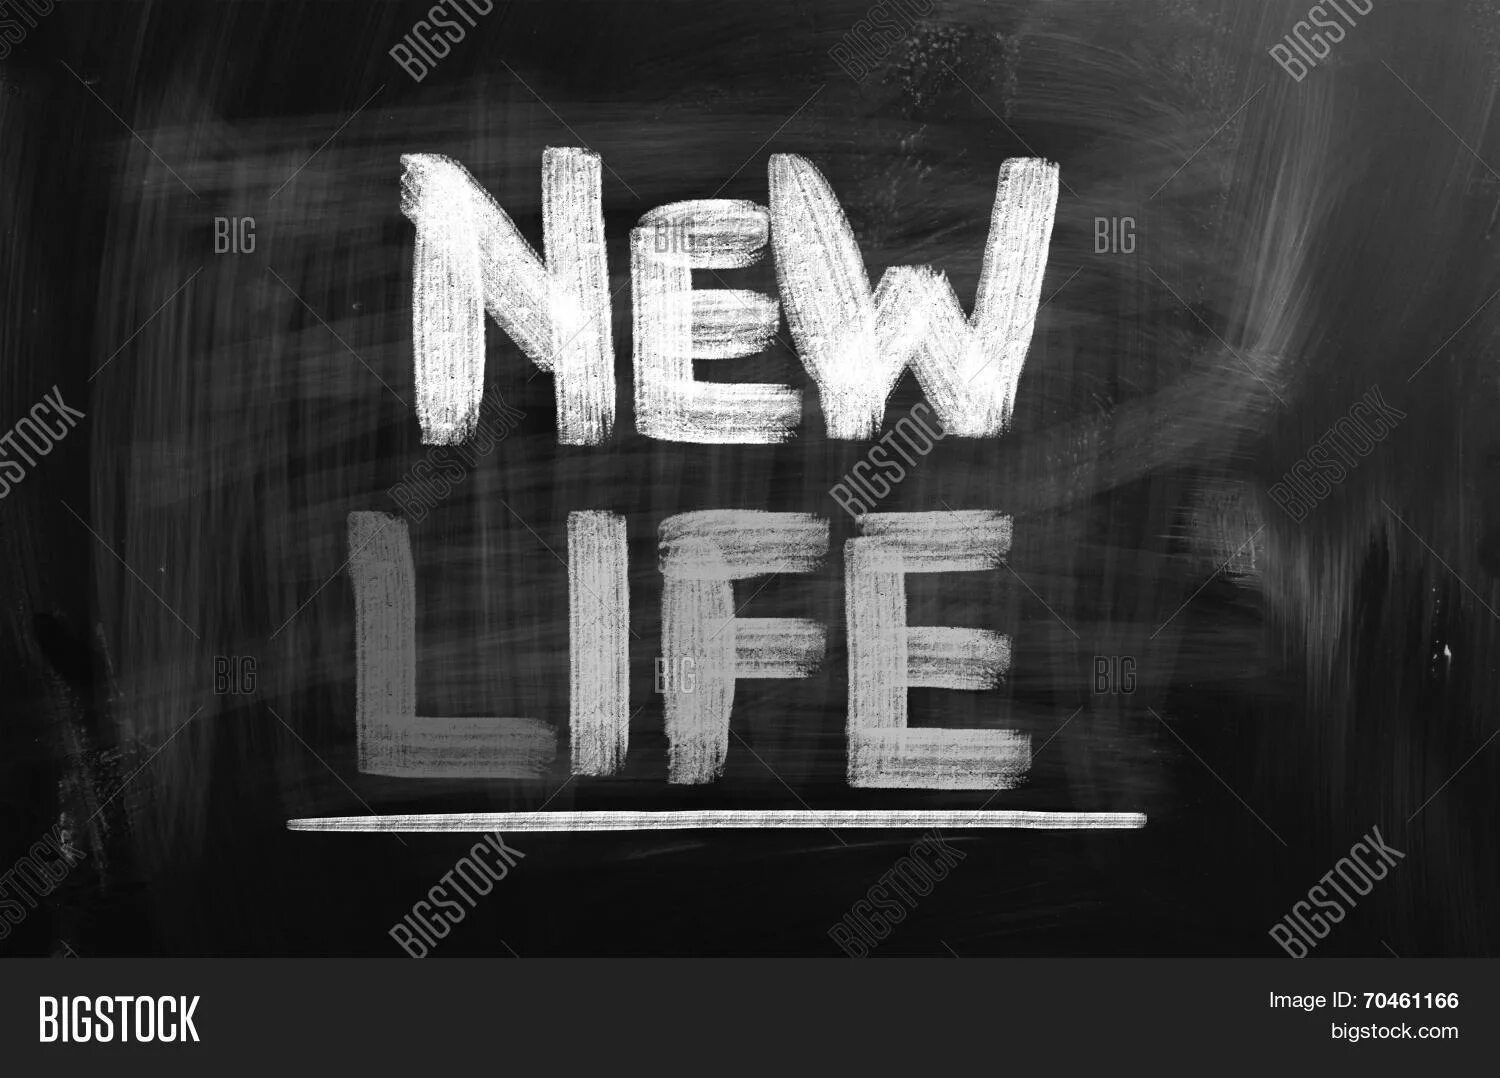 The New Life. Картинки лайф Нью. Happy New Life картинки. Надписью New Life фото.